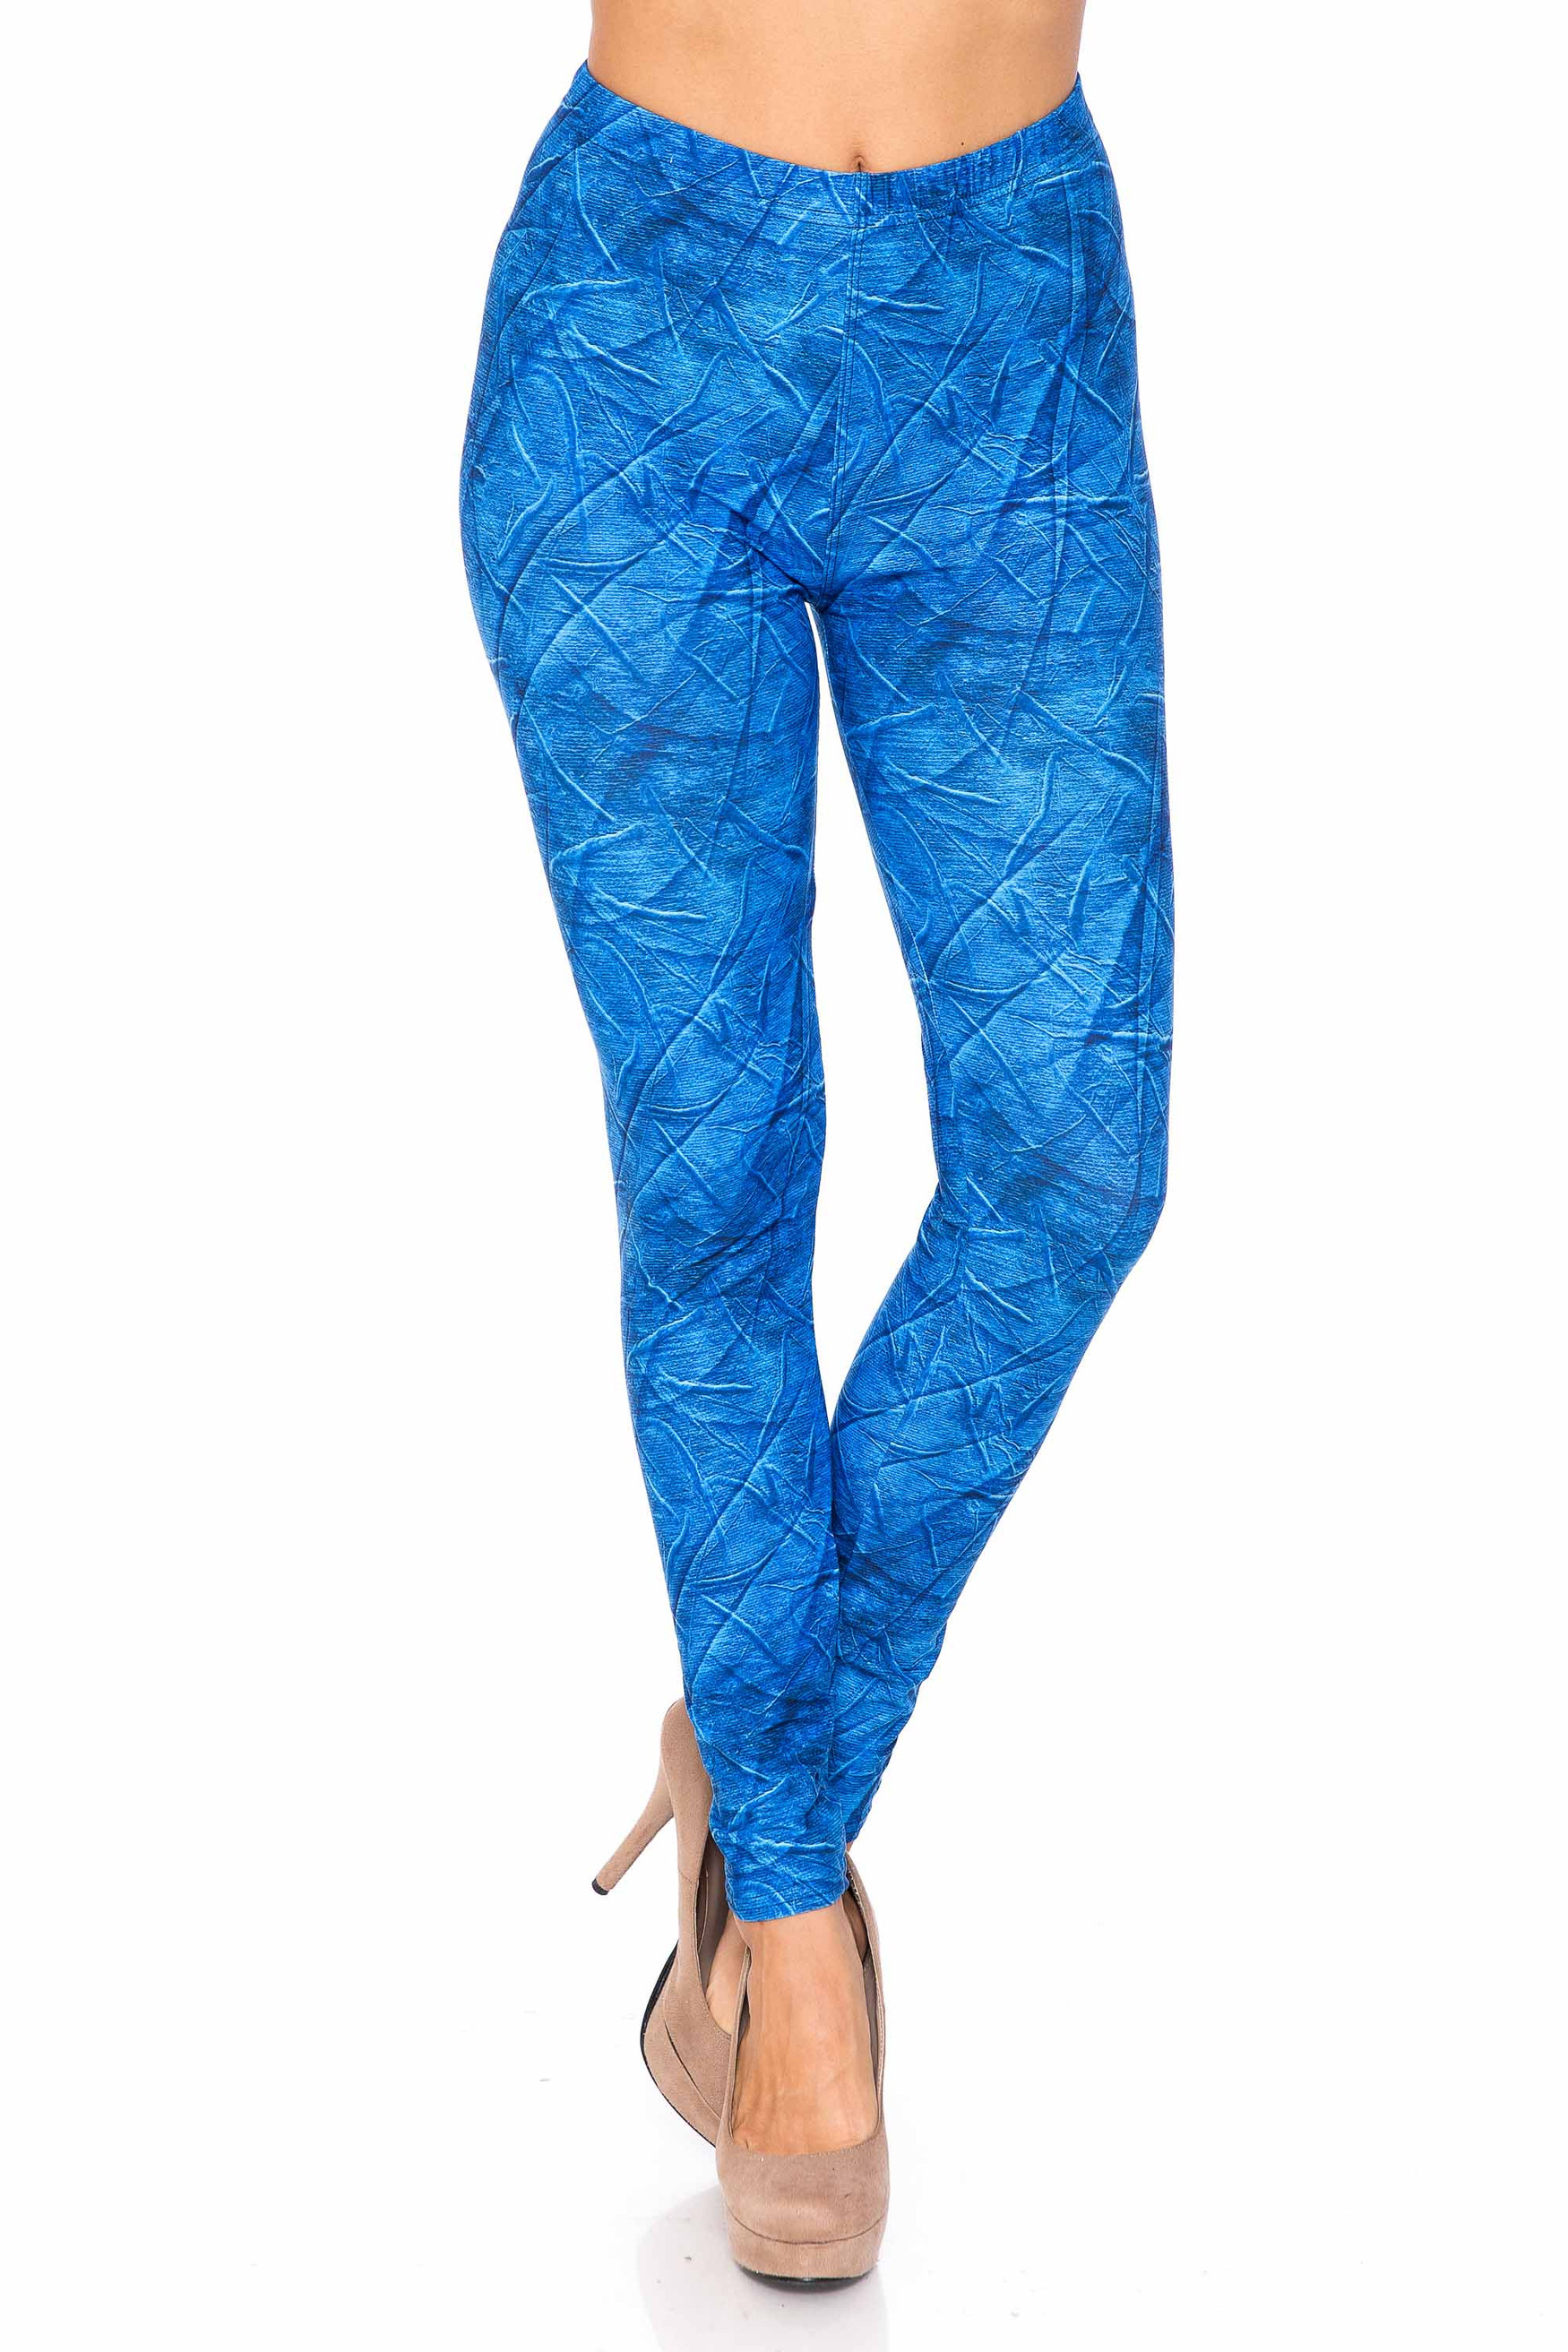 Creamy Blue Wrinkled Denim Plus Size Leggings - USA Fashion™